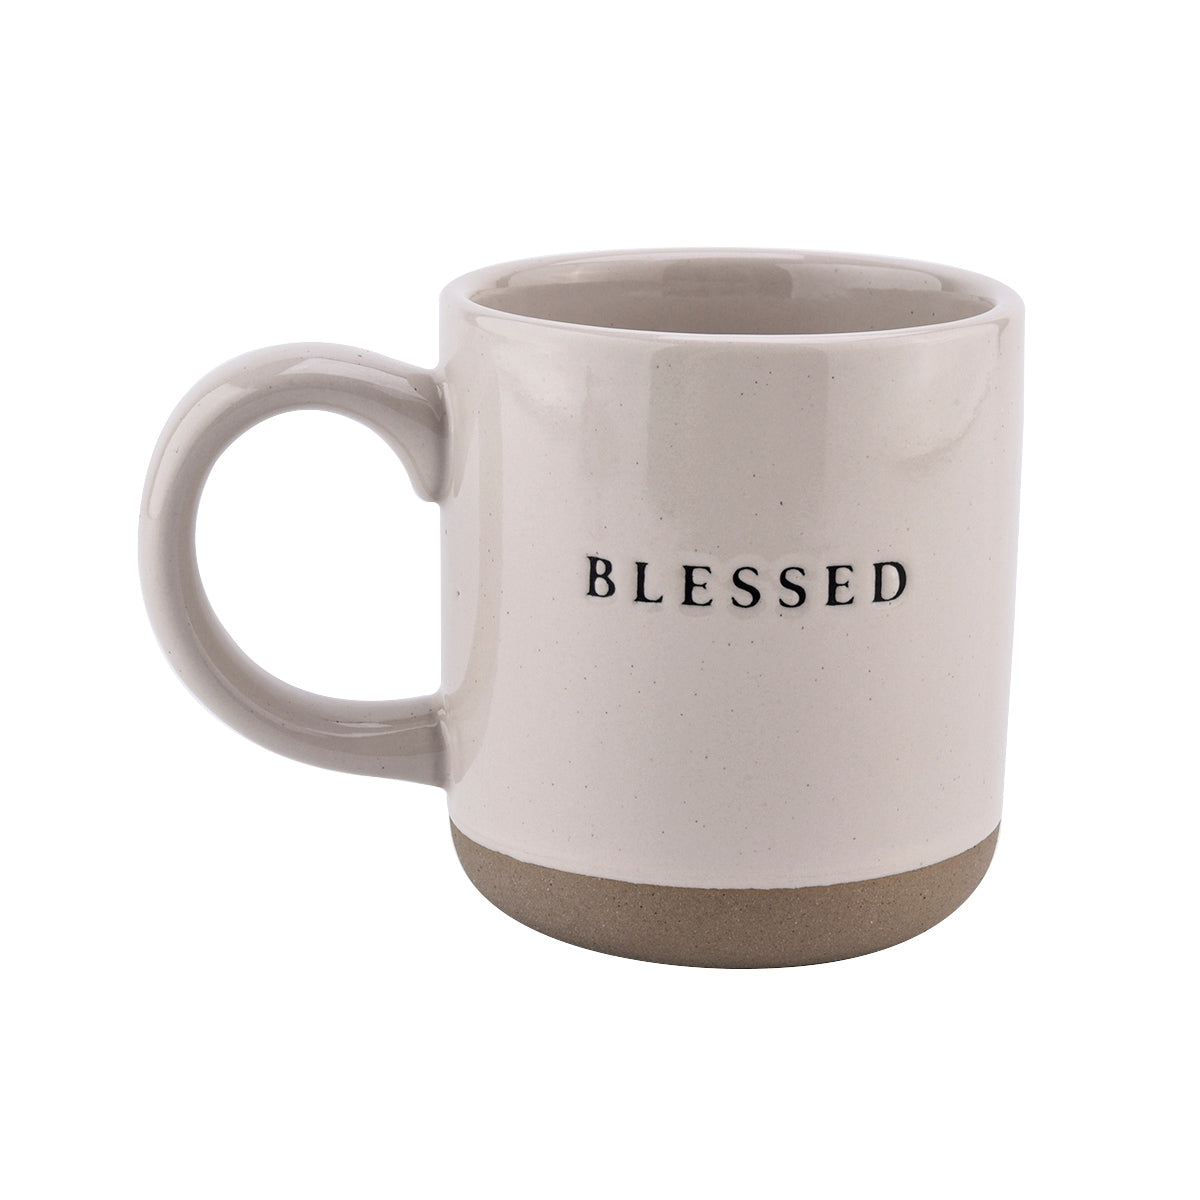 Blessed - Cream Stoneware Coffee Mug - 14 oz